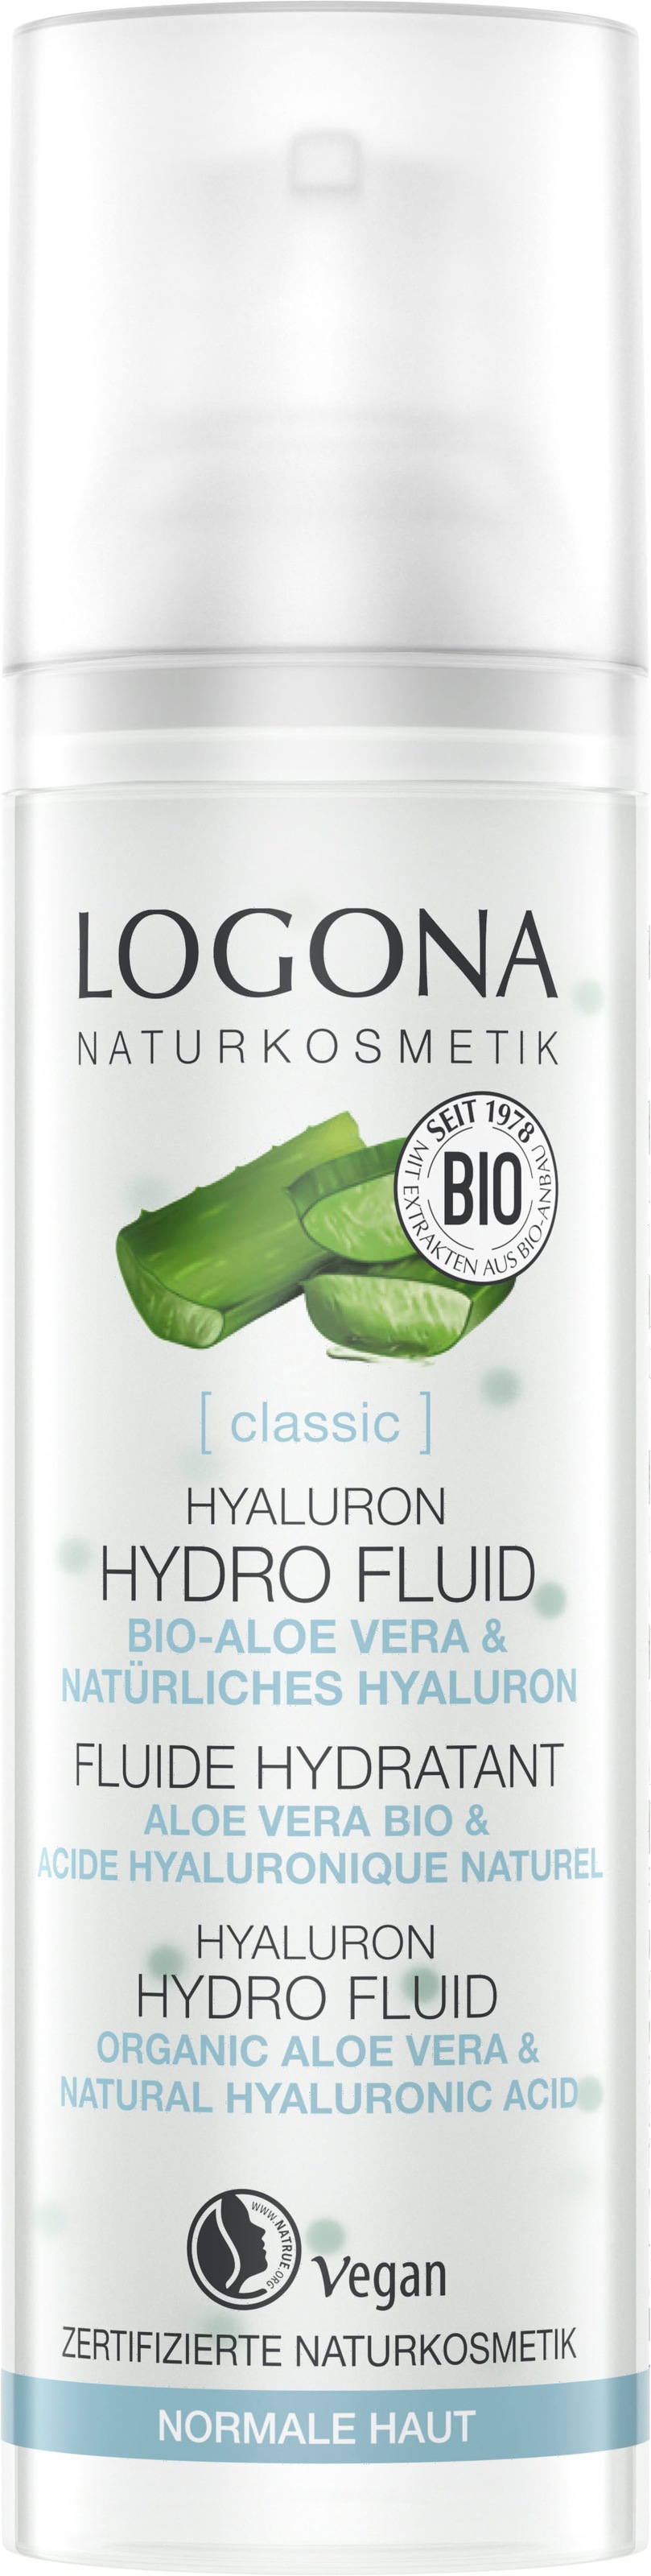 LOGONA Gesichtsfluid »Logona classic online Hyaluron | Fluid« Hydro BAUR kaufen